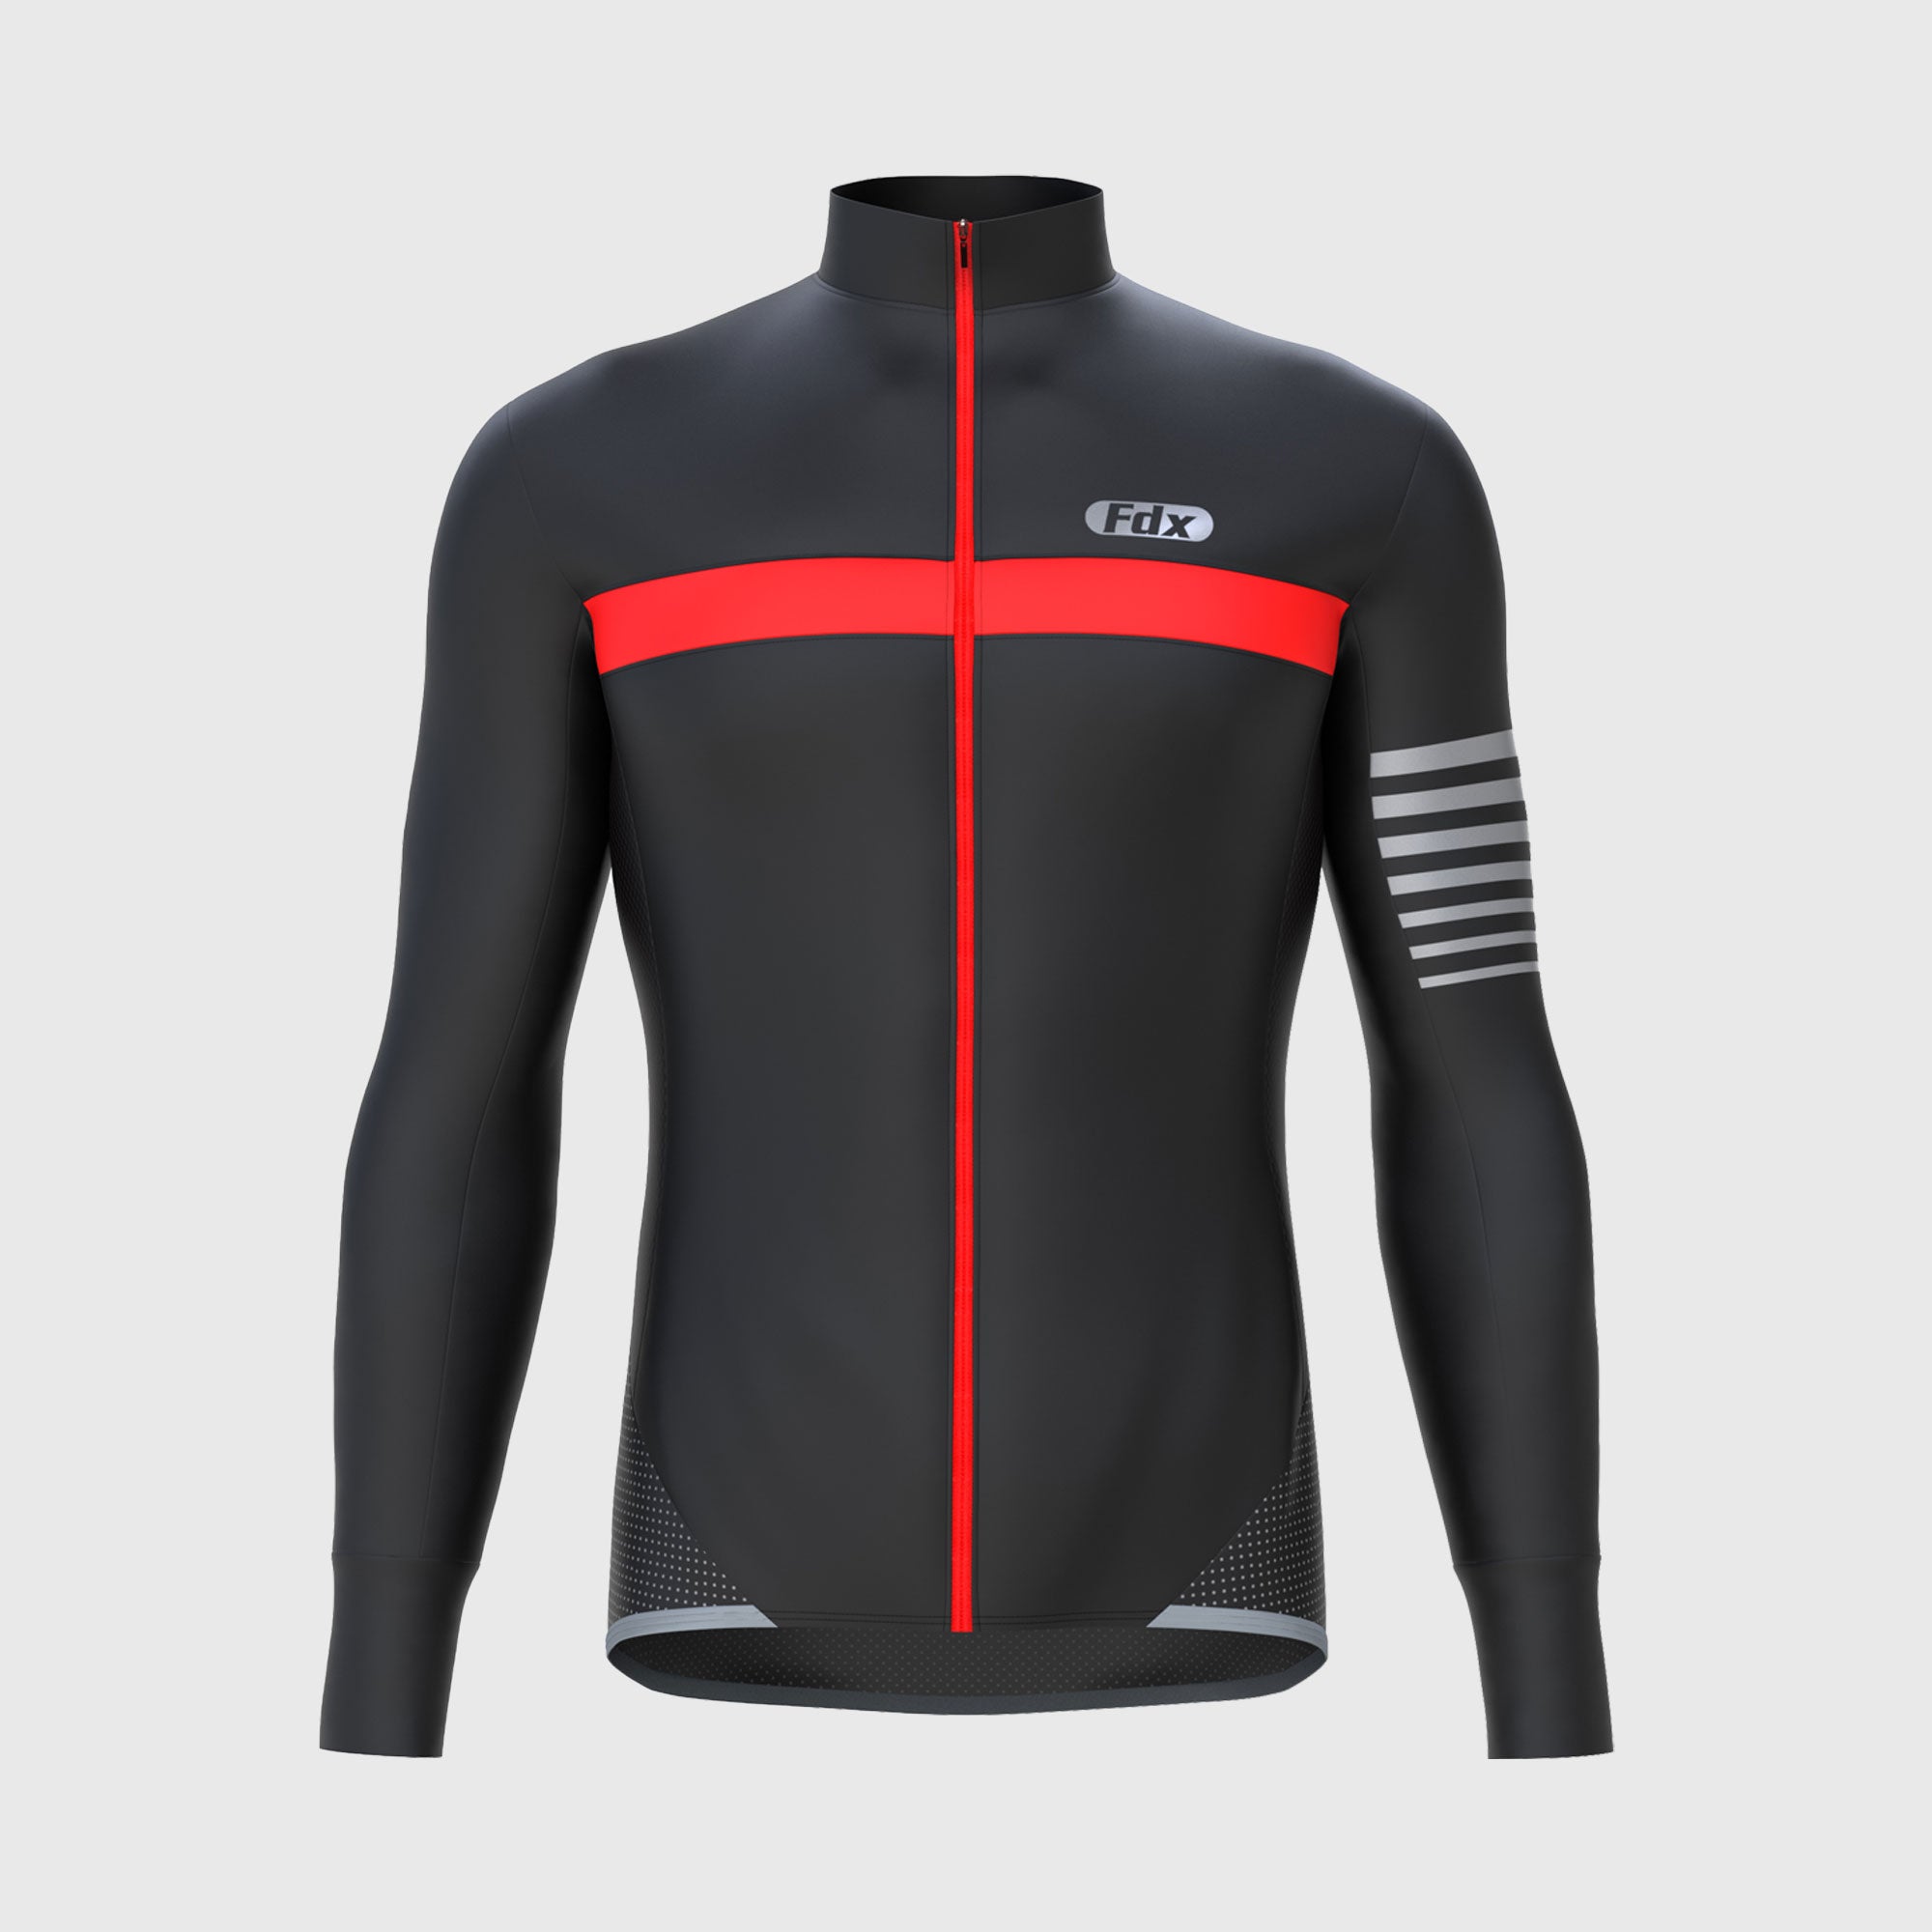 Fdx Mens Red Long Sleeve Cycling Jersey for Winter Roubaix Thermal Fleece Road Bike Wear Top Full Zipper, Pockets & Hi-viz Reflectors - All Day